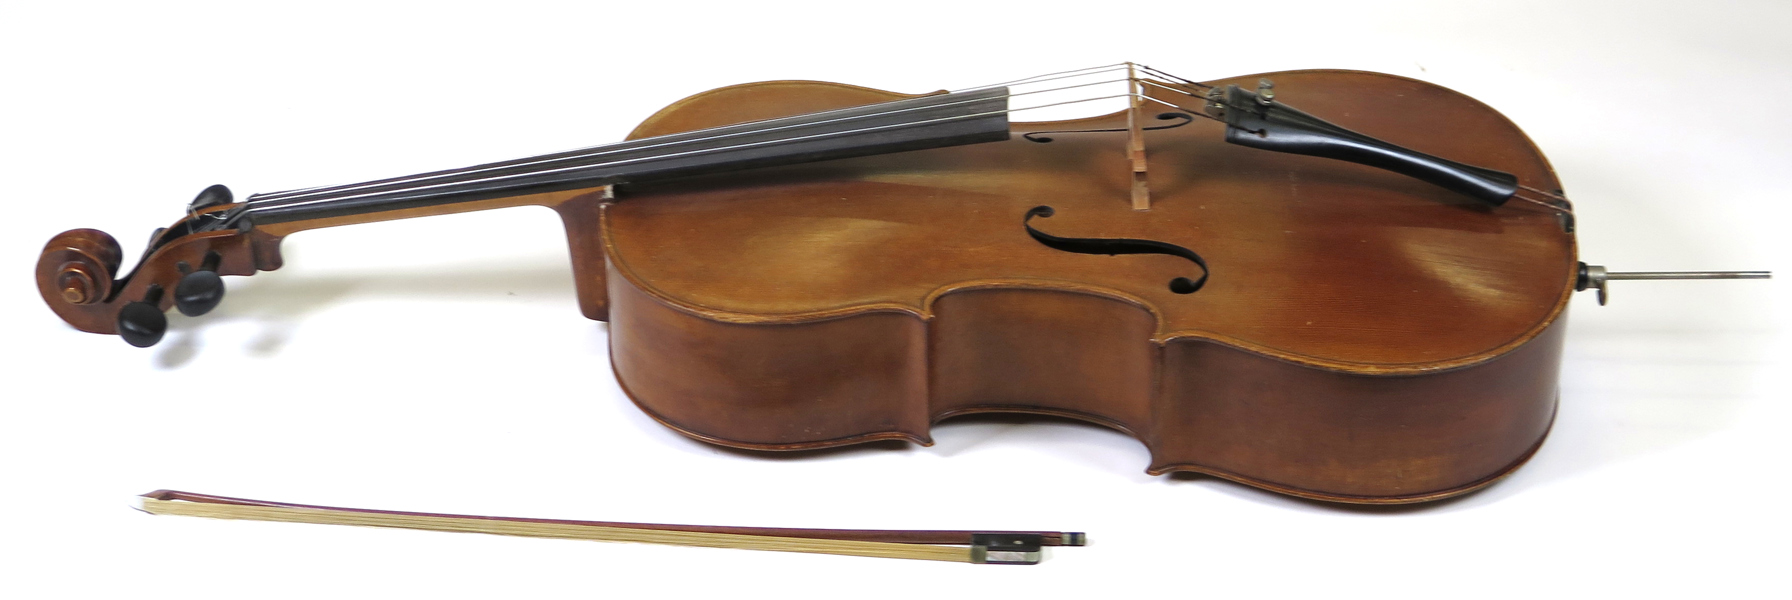 Cello med stråke, Tjeckoslovakien, 1900-tal, medföljer stråke, l 122 cm exklusive stöd_26239a_8db10fd178277b7_lg.jpeg